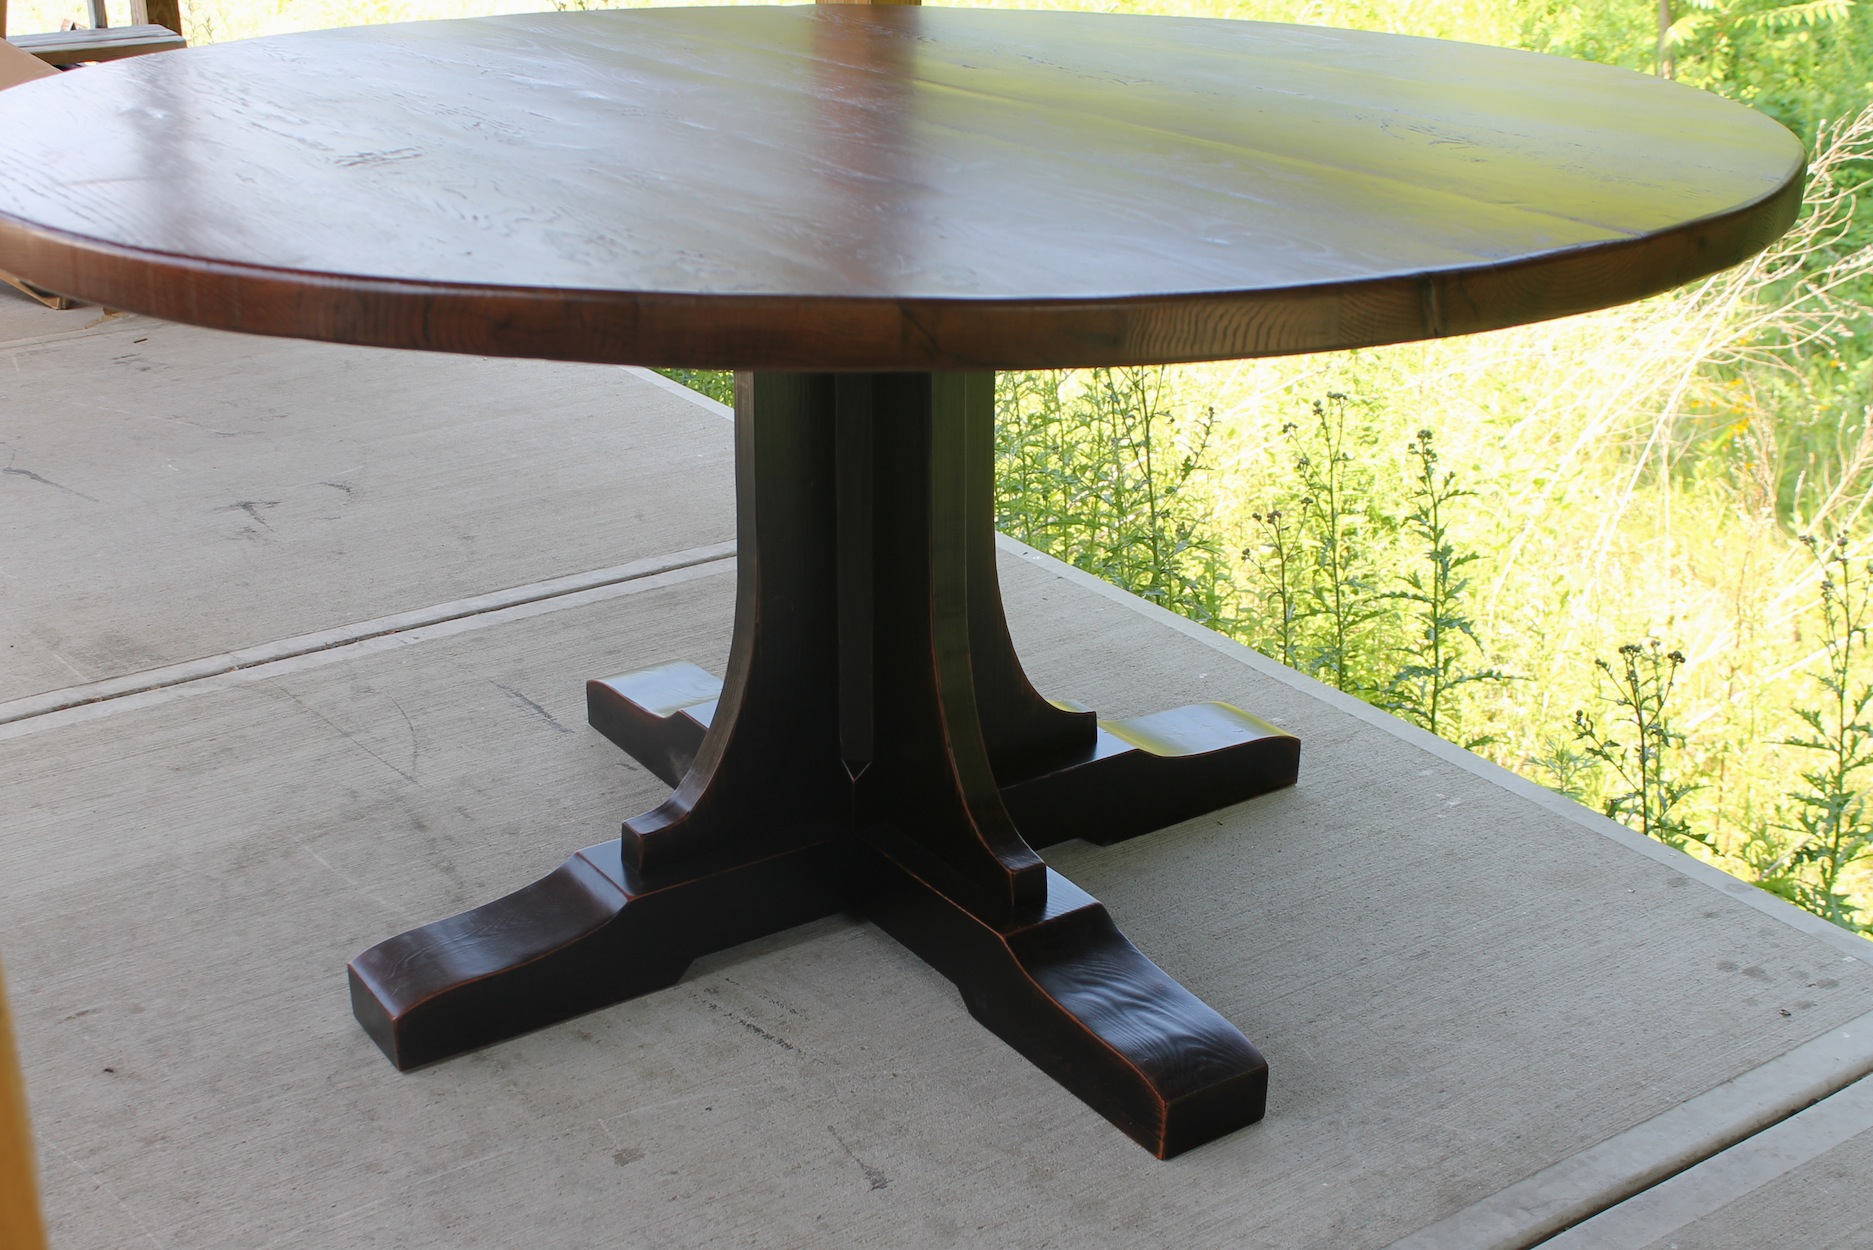 Custom Pedestal for Round Table - ECustomFinishes